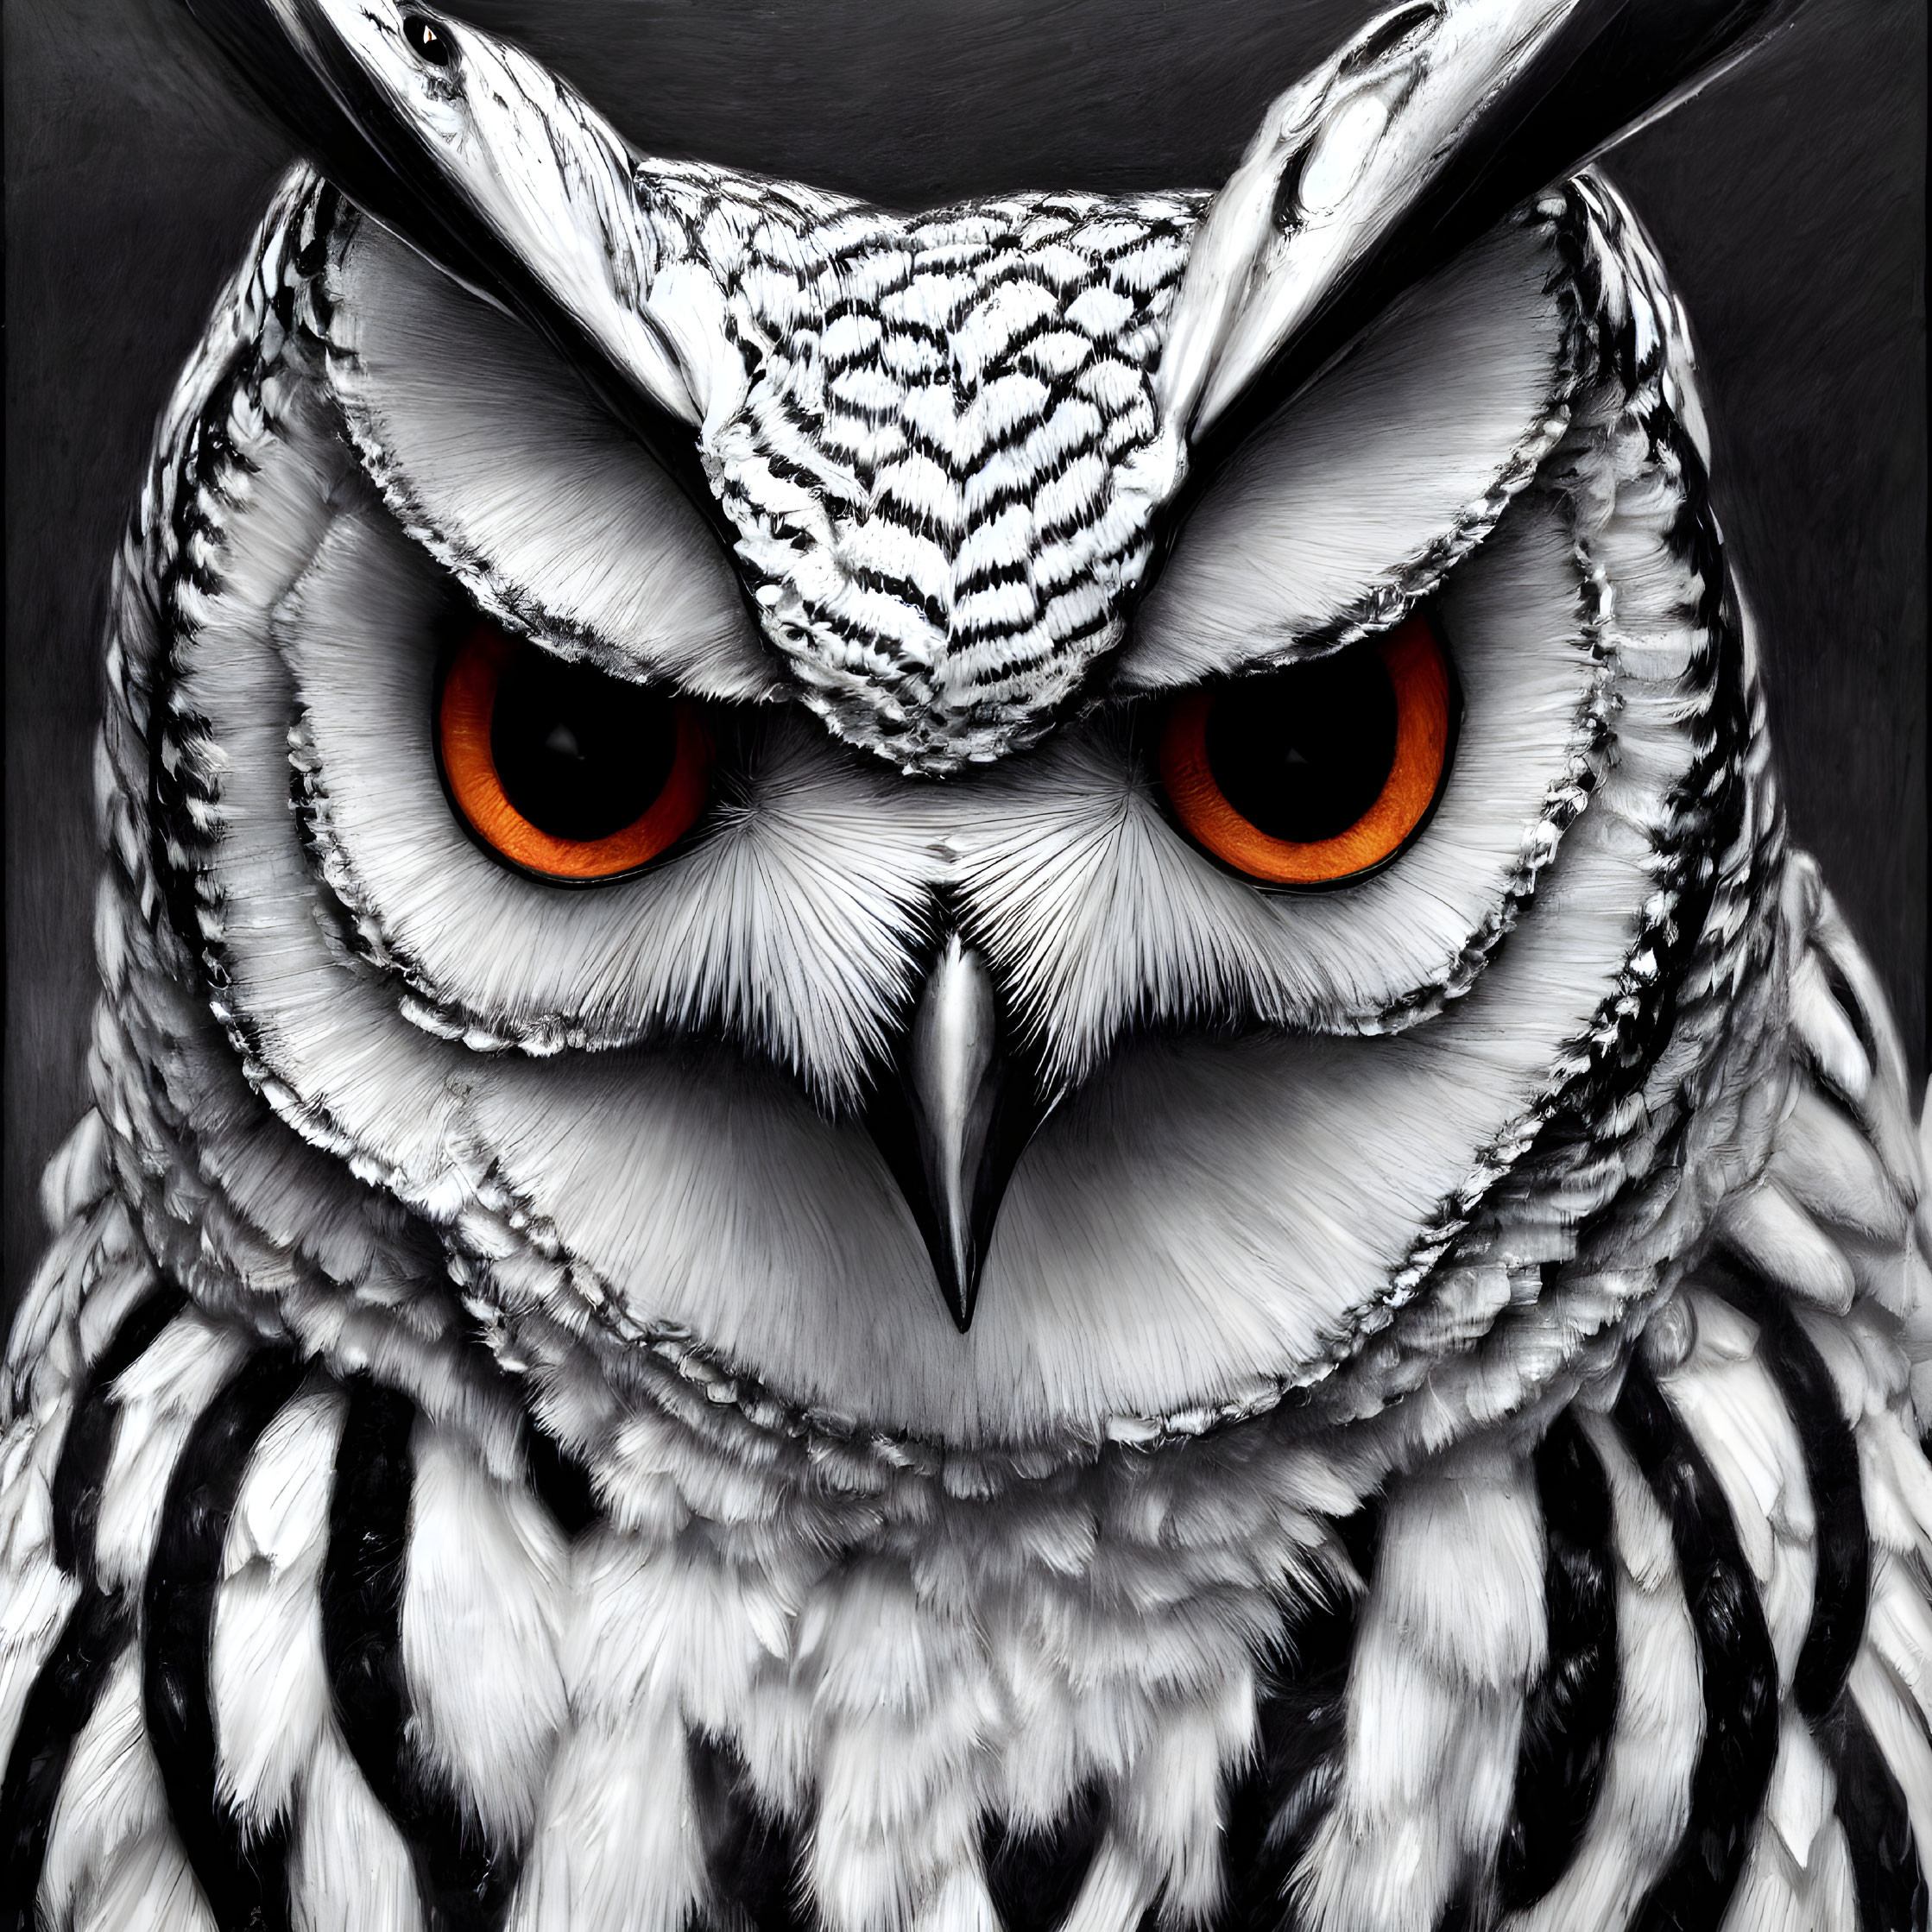 Detailed Owl Illustration with Striking Orange Eyes and Feather Patterns